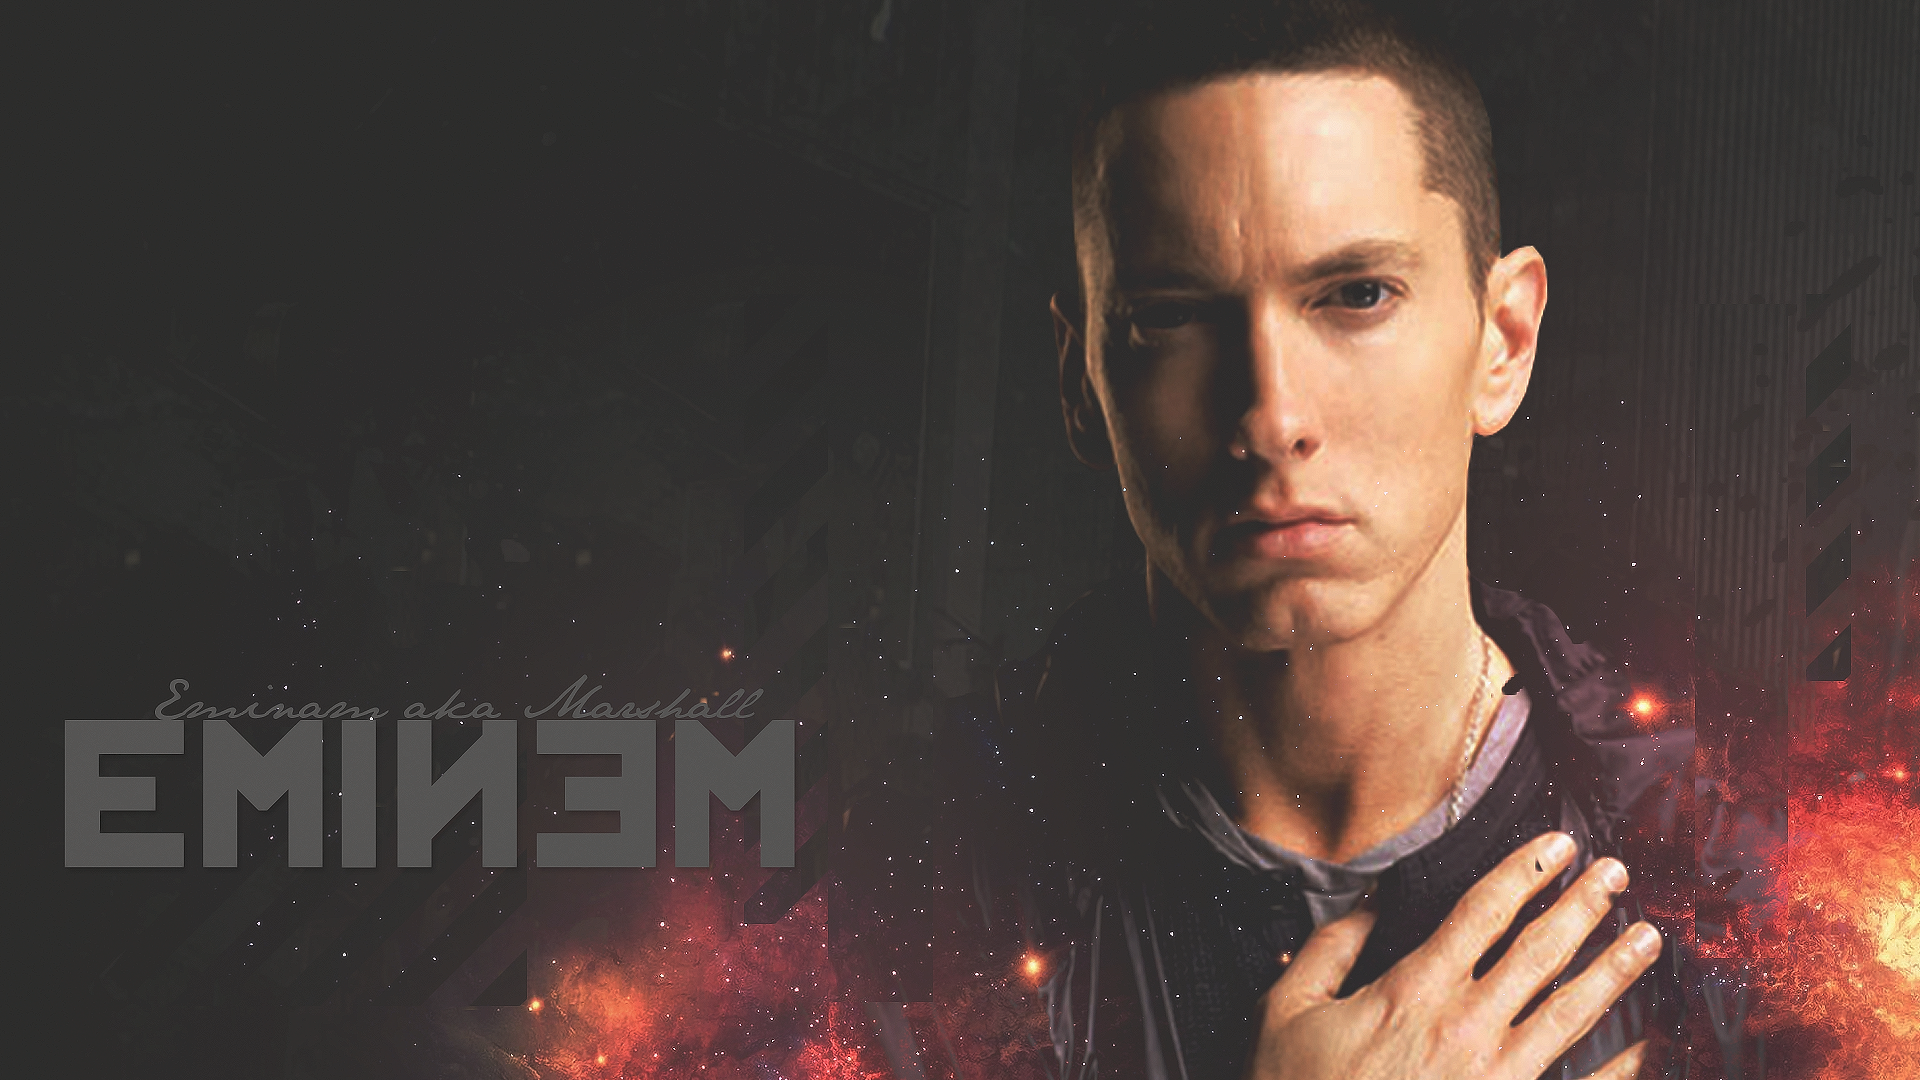 Eminem wallpaper full hd